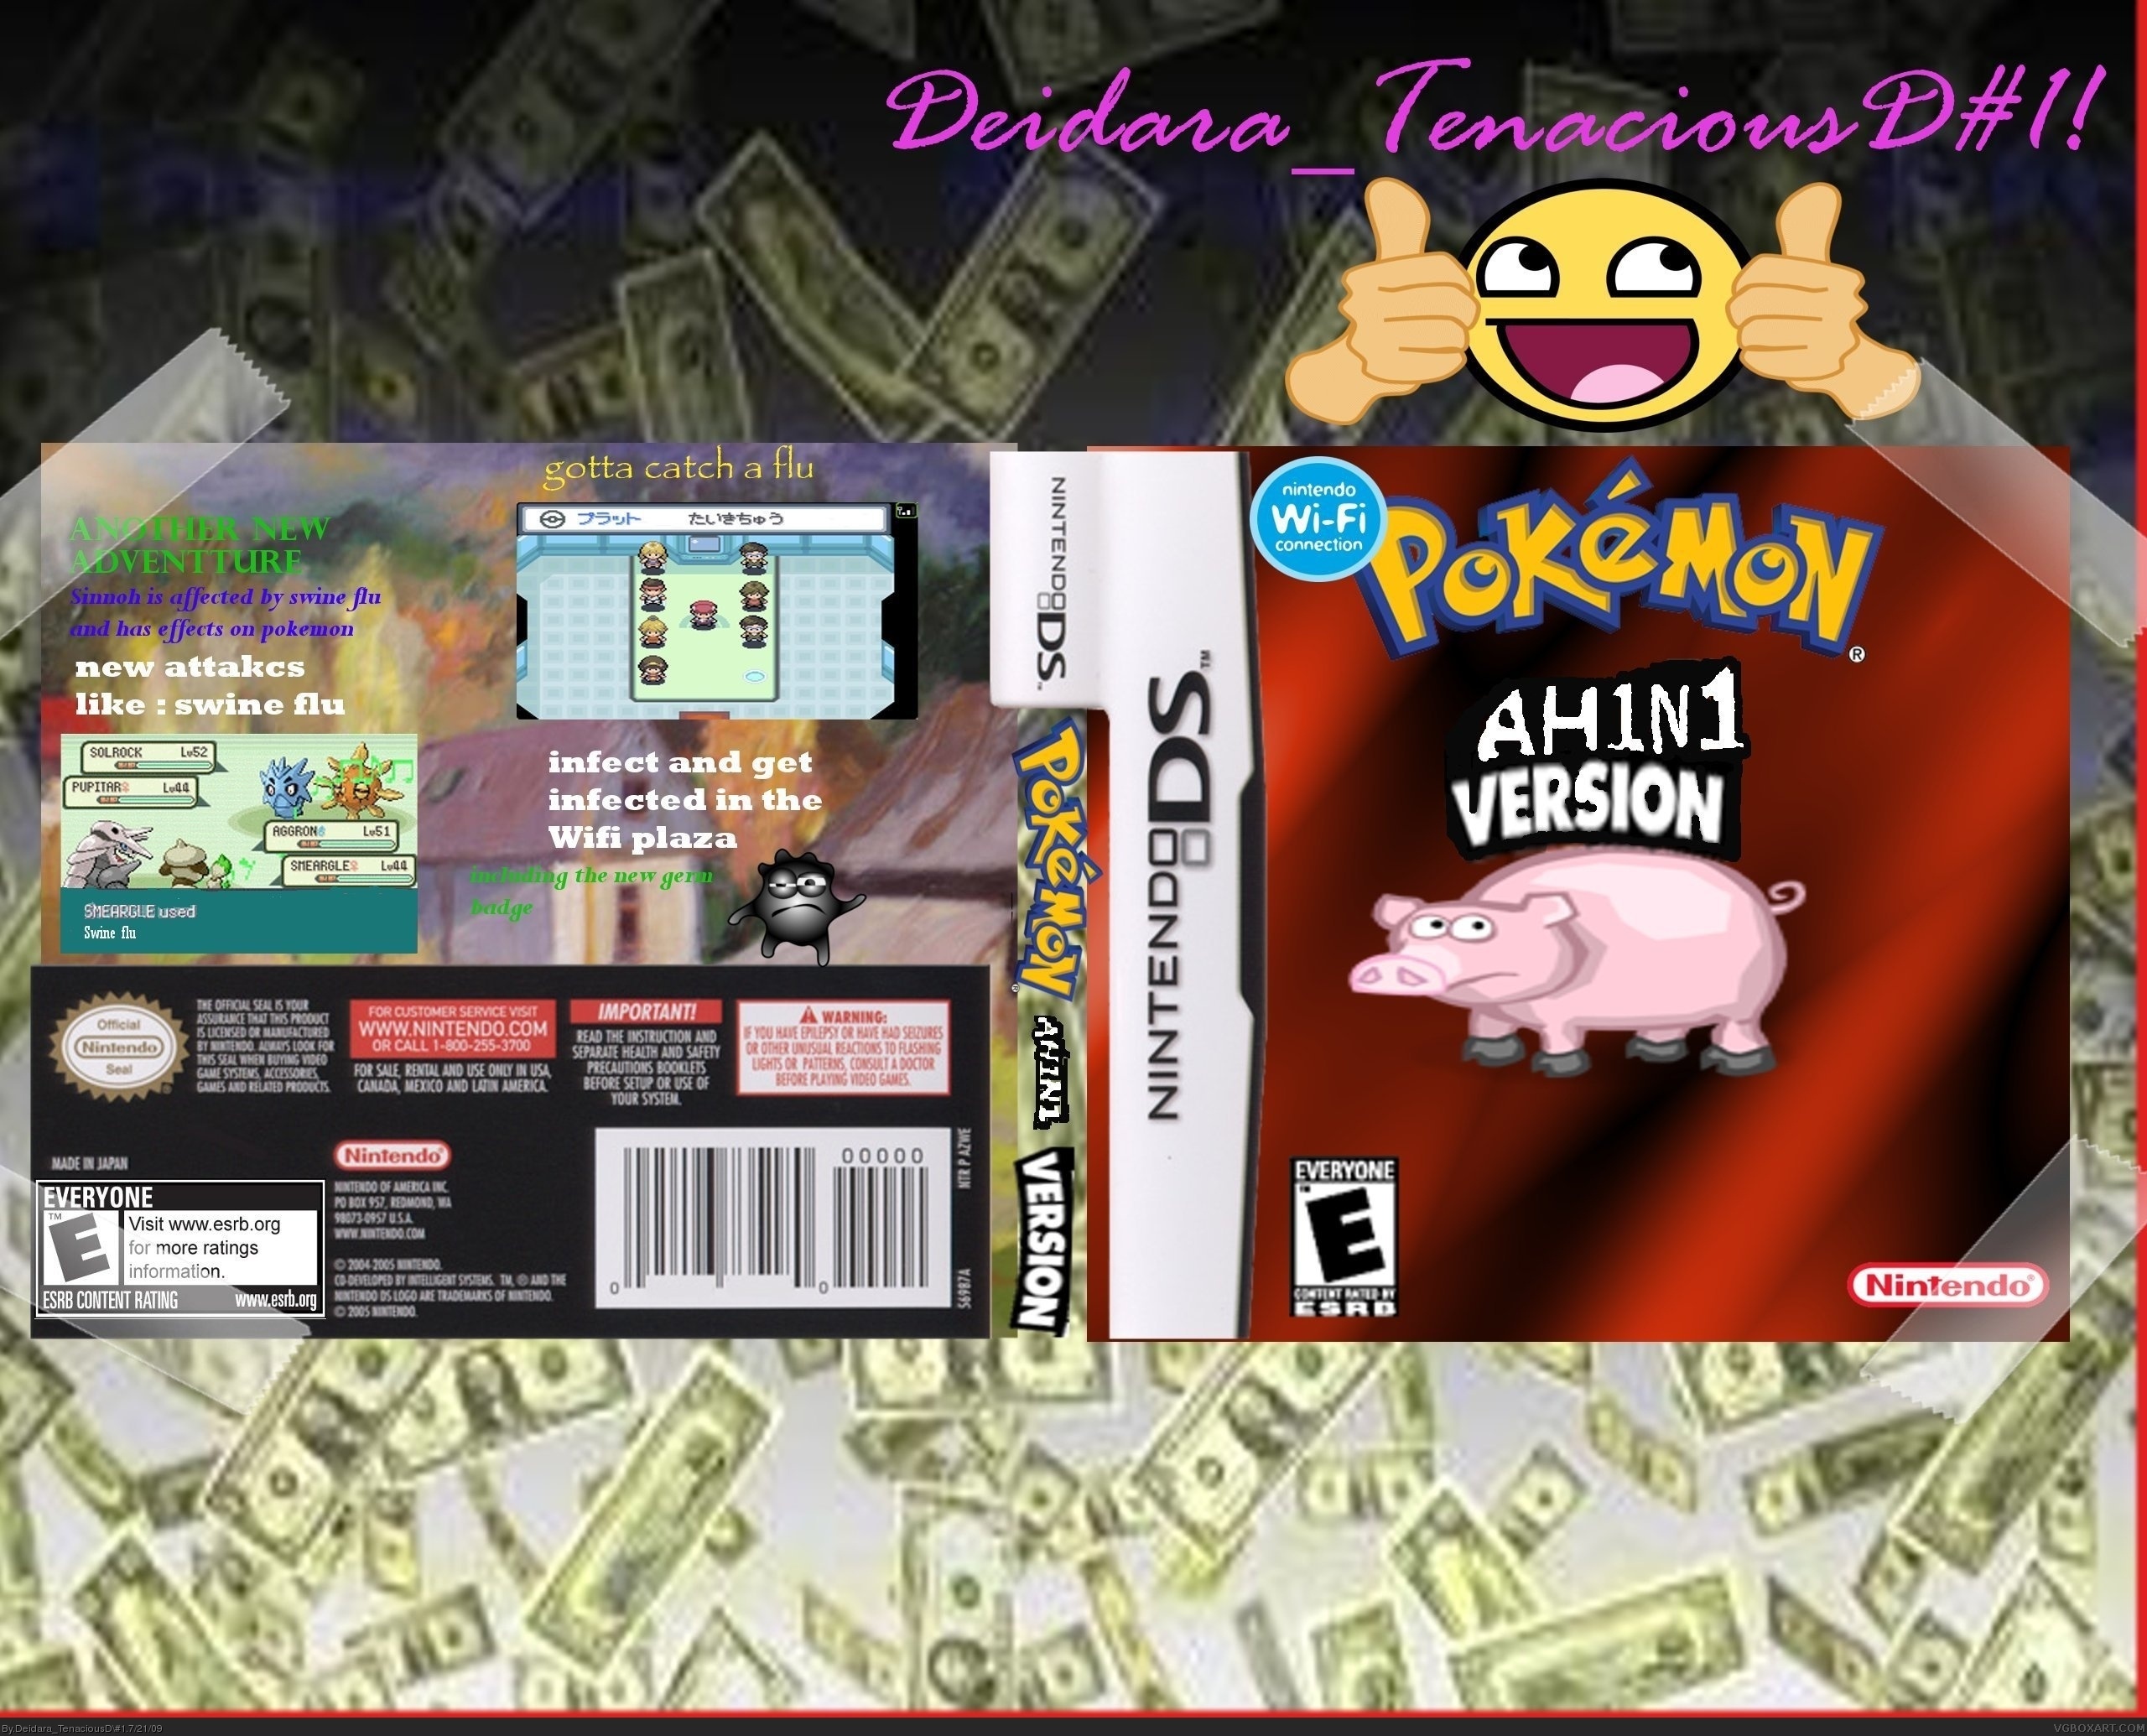 Pokemon: AH1N1 version box cover